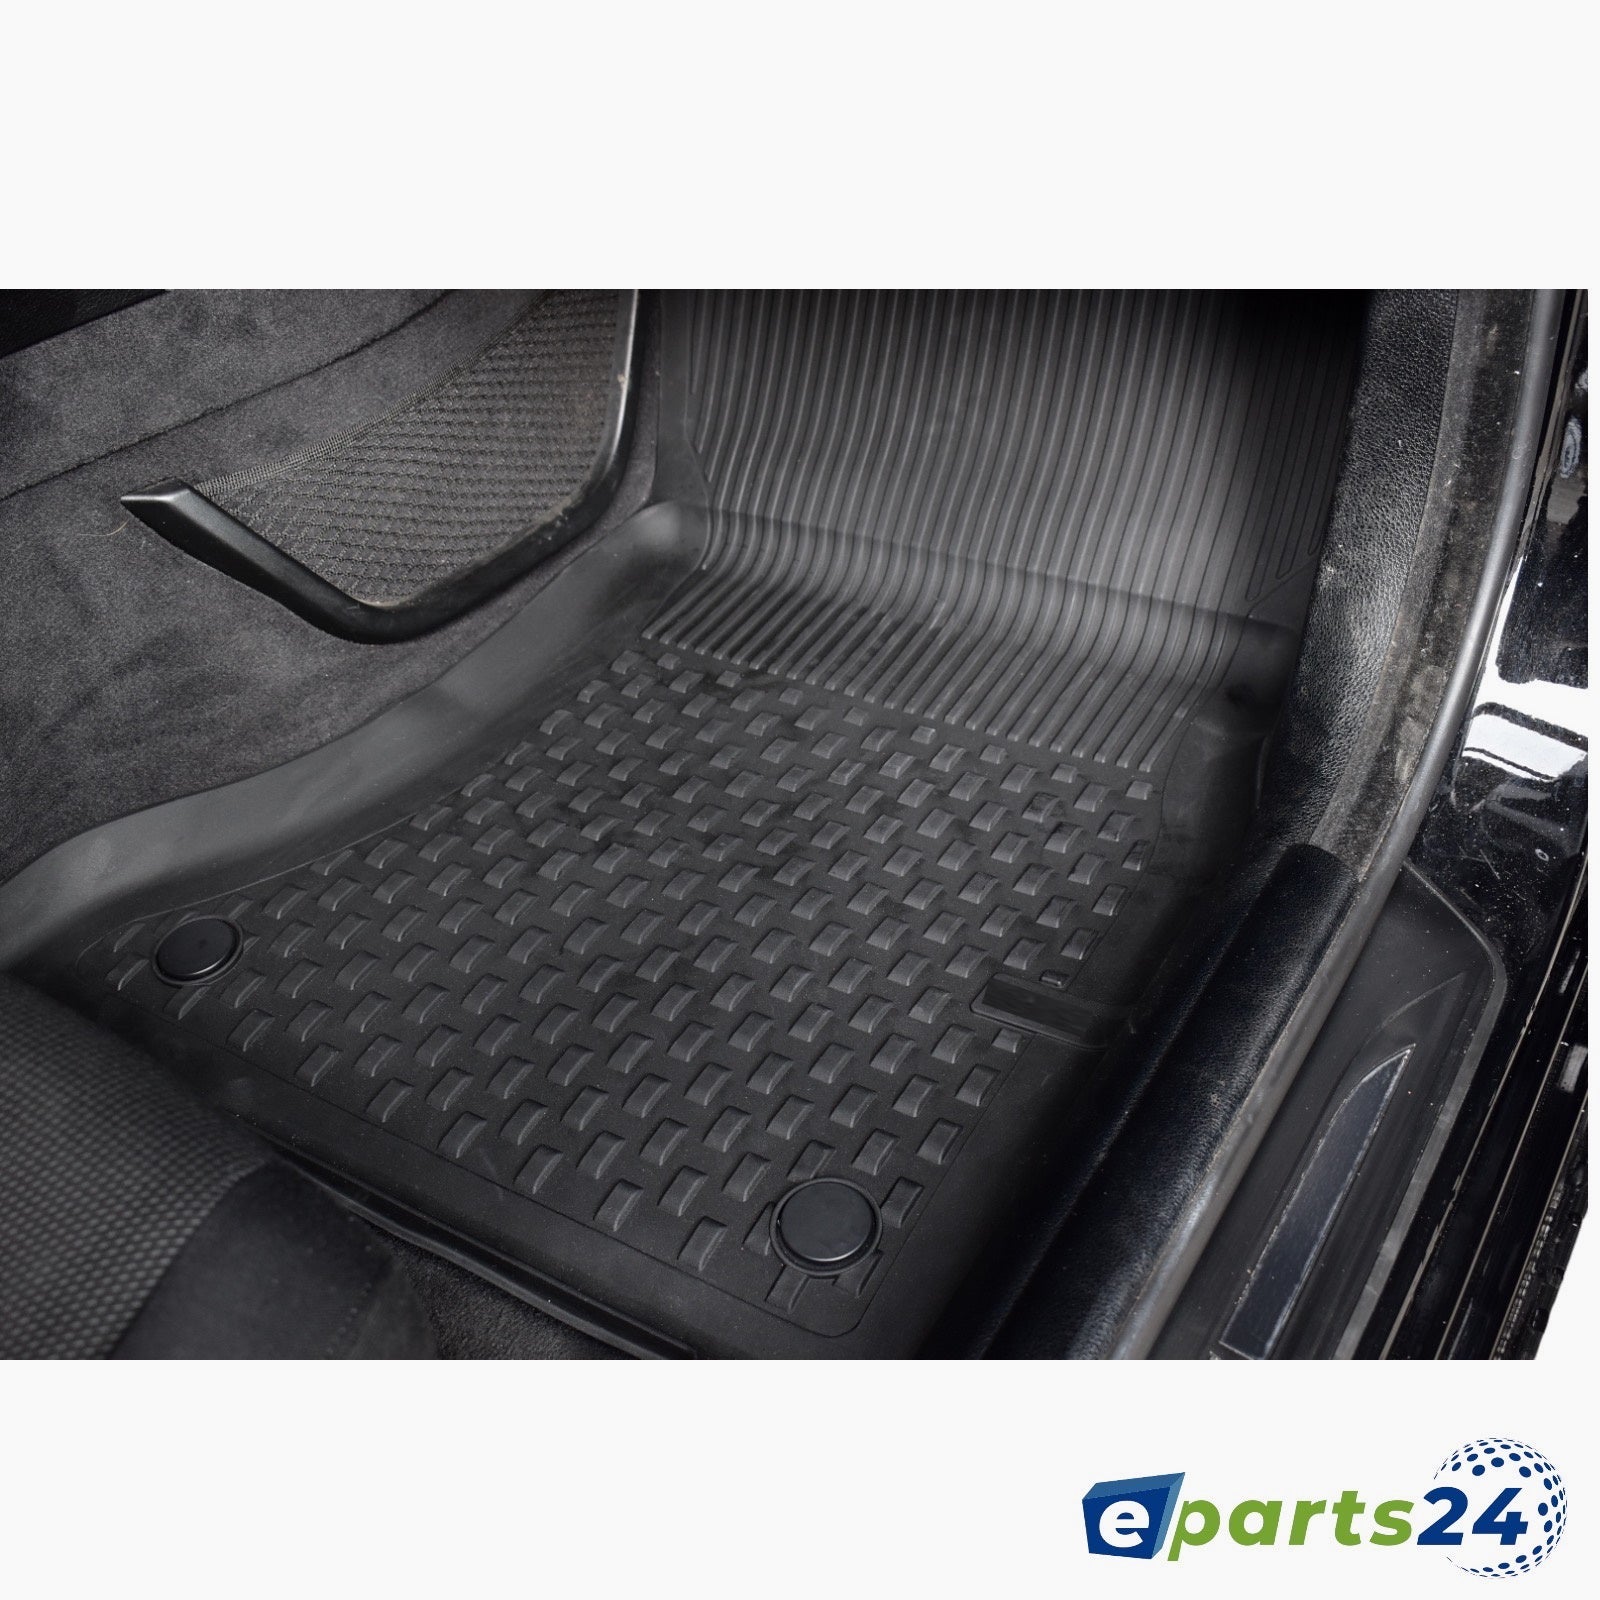 Dacia E-Parts24 II 2018-2023 Duster – 5tlg. M Automatten für Premium Fußmatten TPE